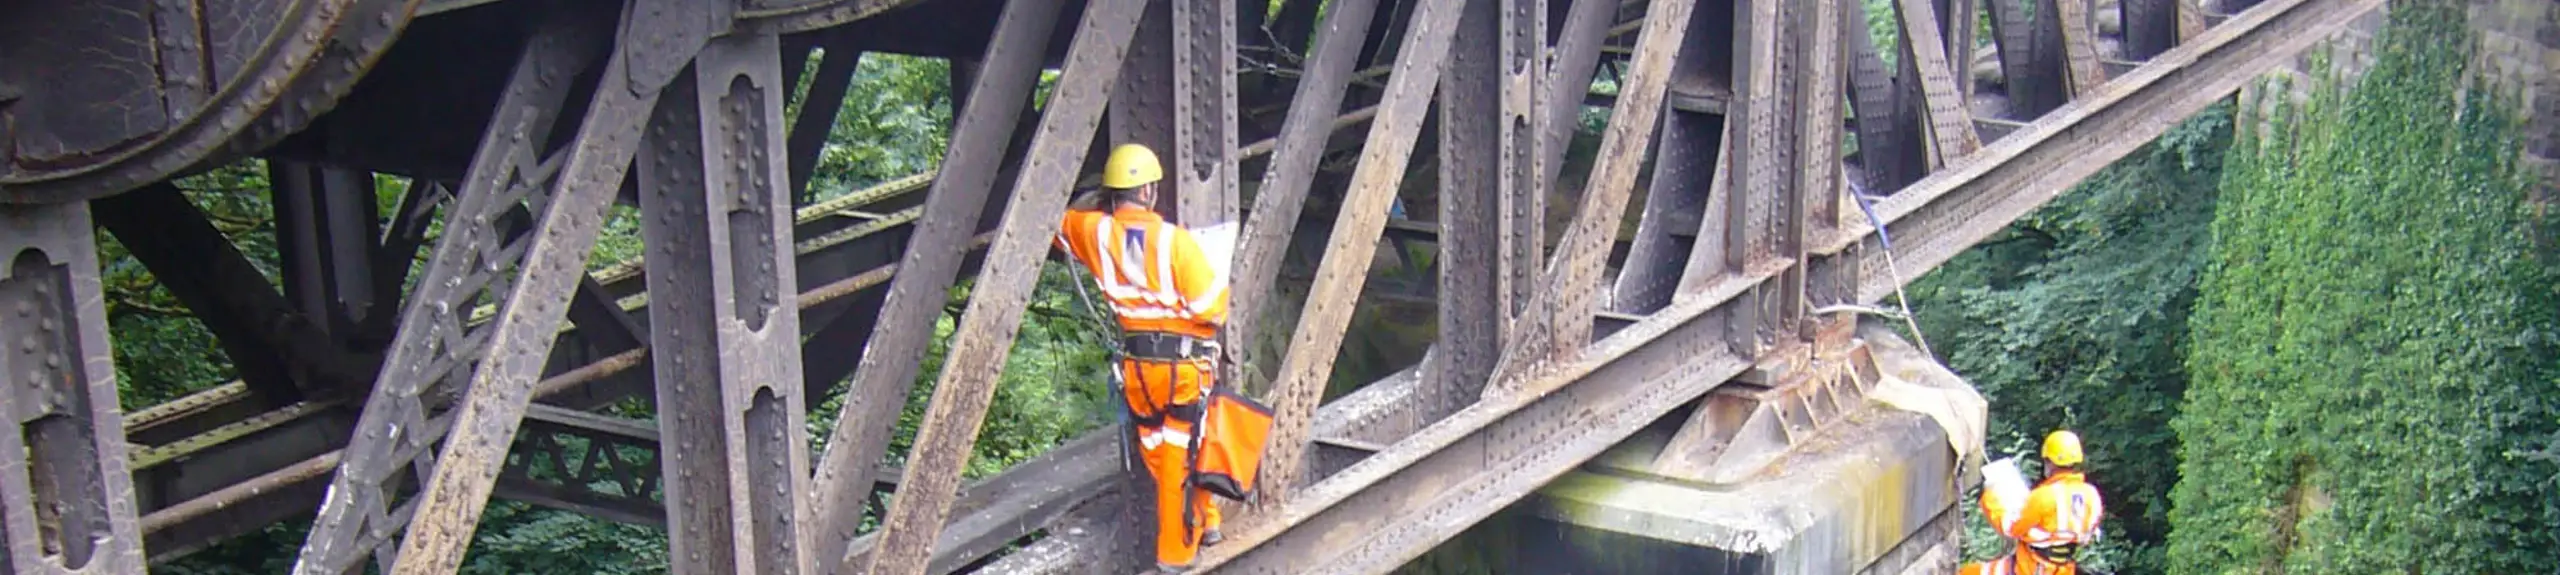 Specialist Access, Inspecting A Rail Bridge